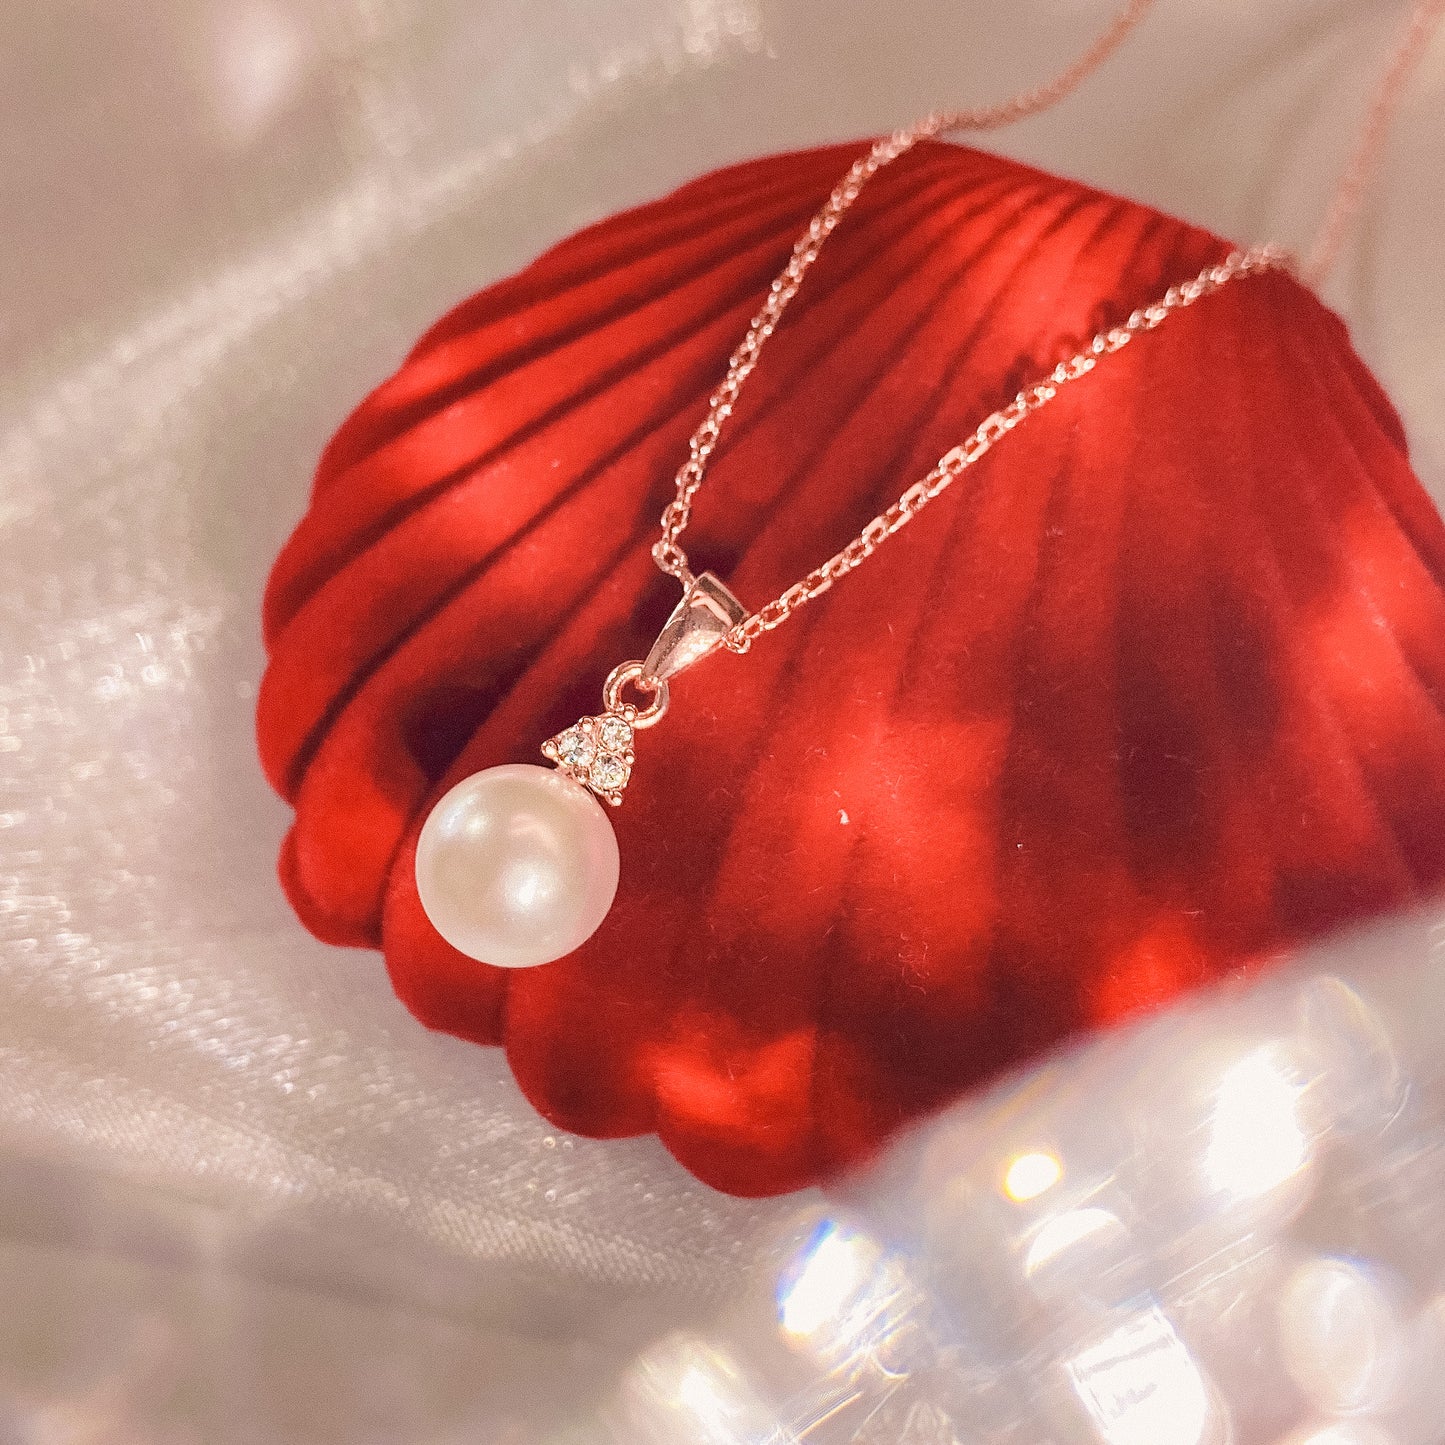 Elegant Pearl Pendant